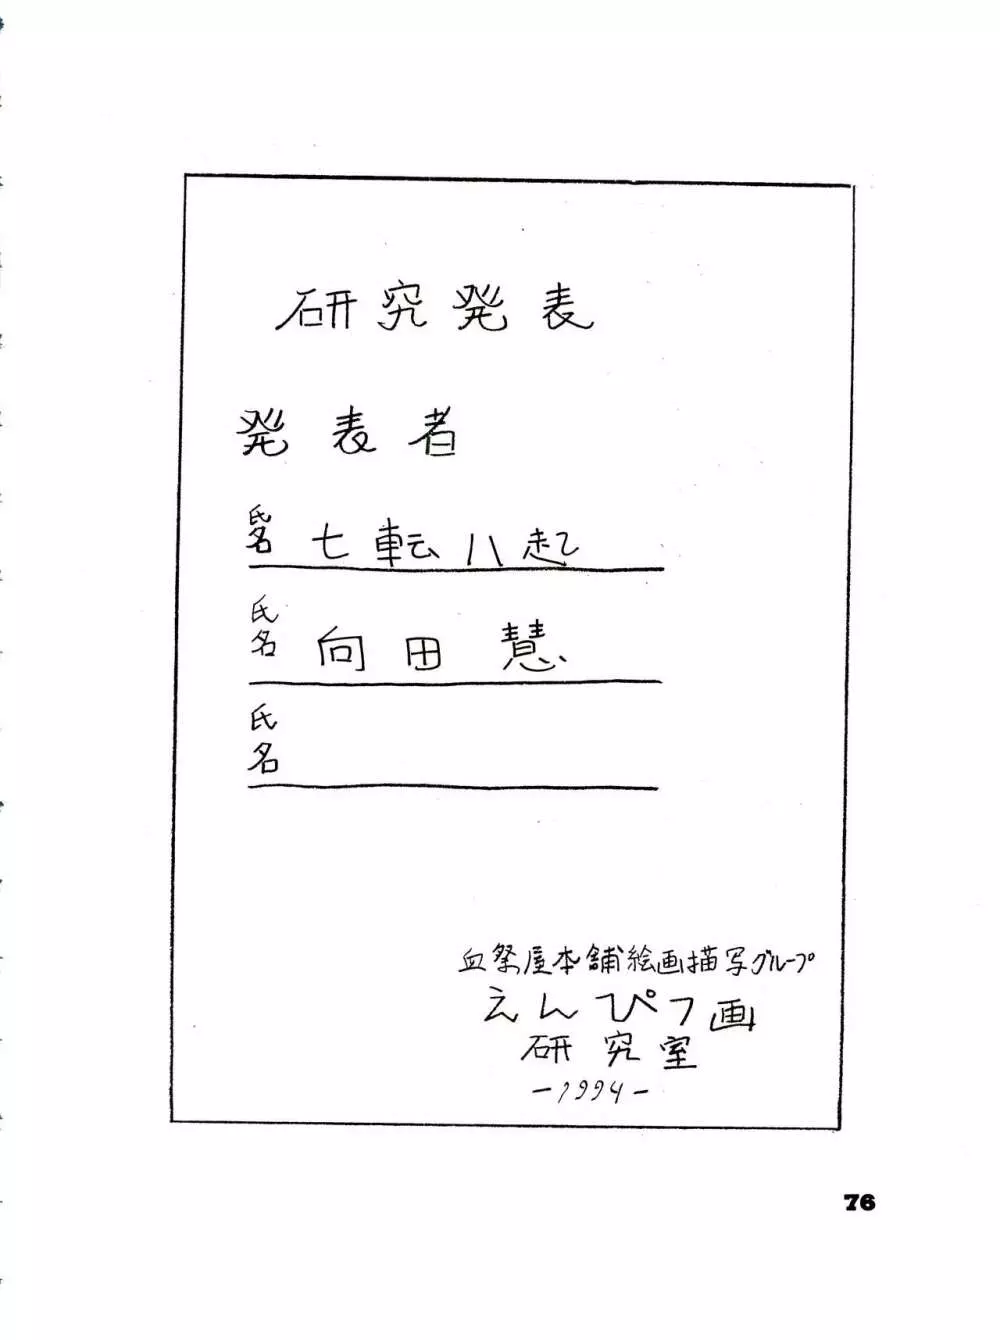 THE SECRET OF 血祭屋 番外編 vol.1 えんぴつ画研究室 - page76